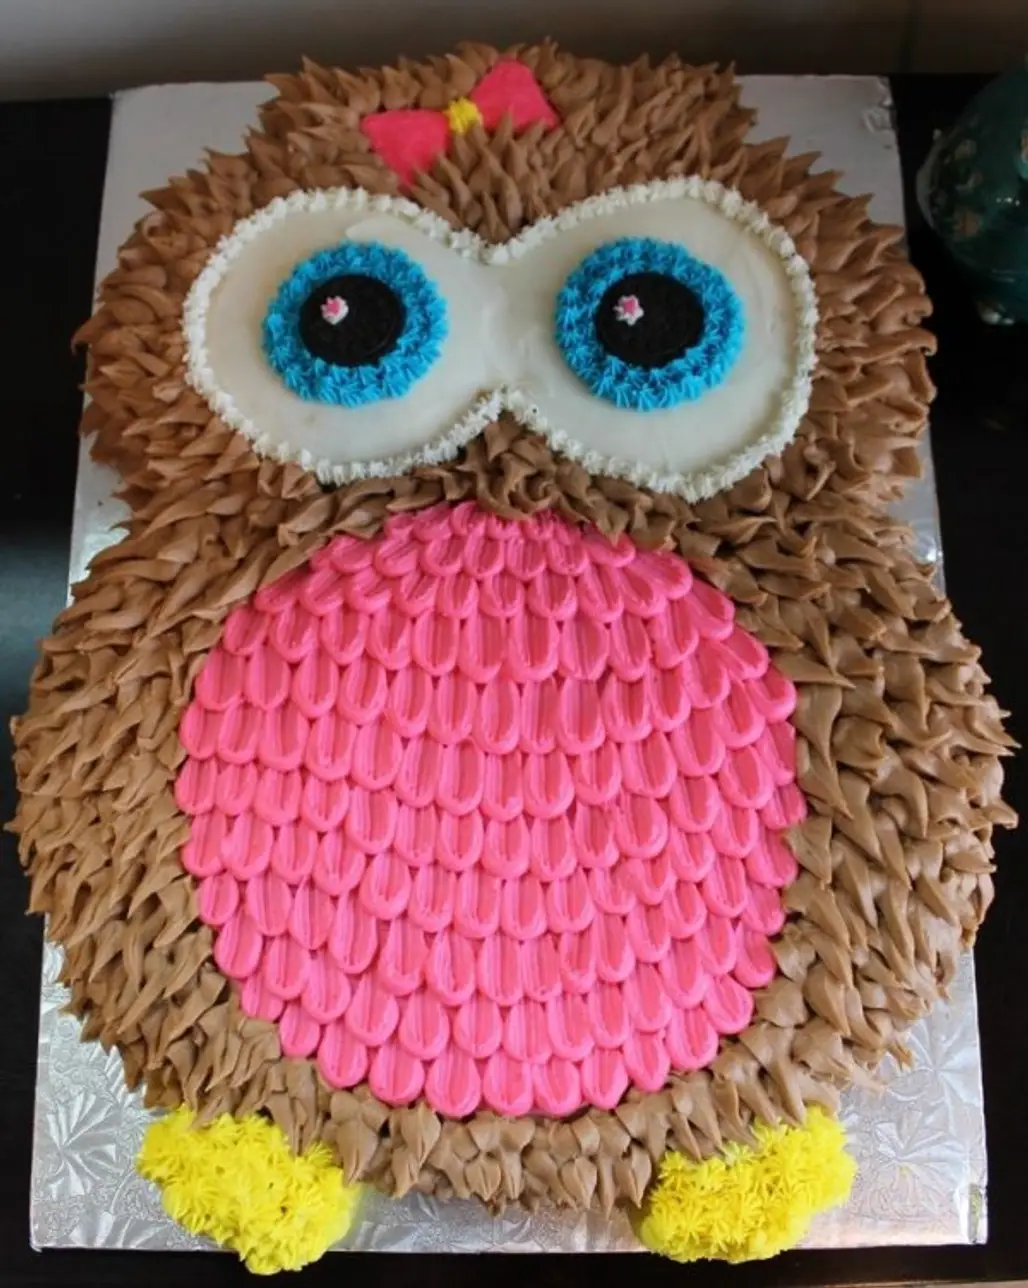 Owl Cake